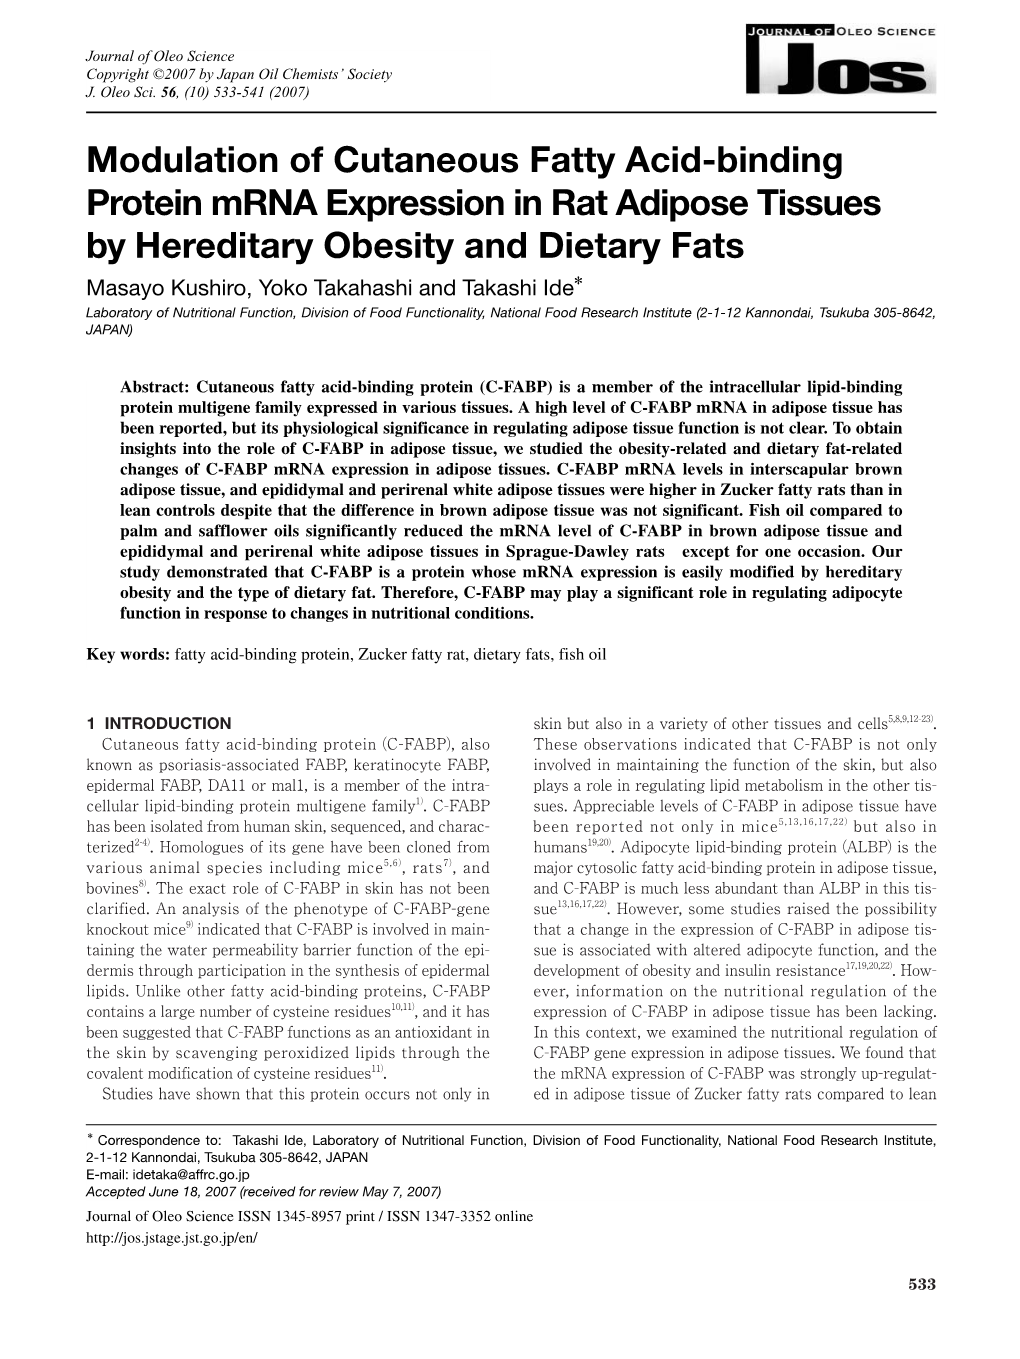 Modulation of Cutaneous Fatty Acid-Binding Protein Mrna